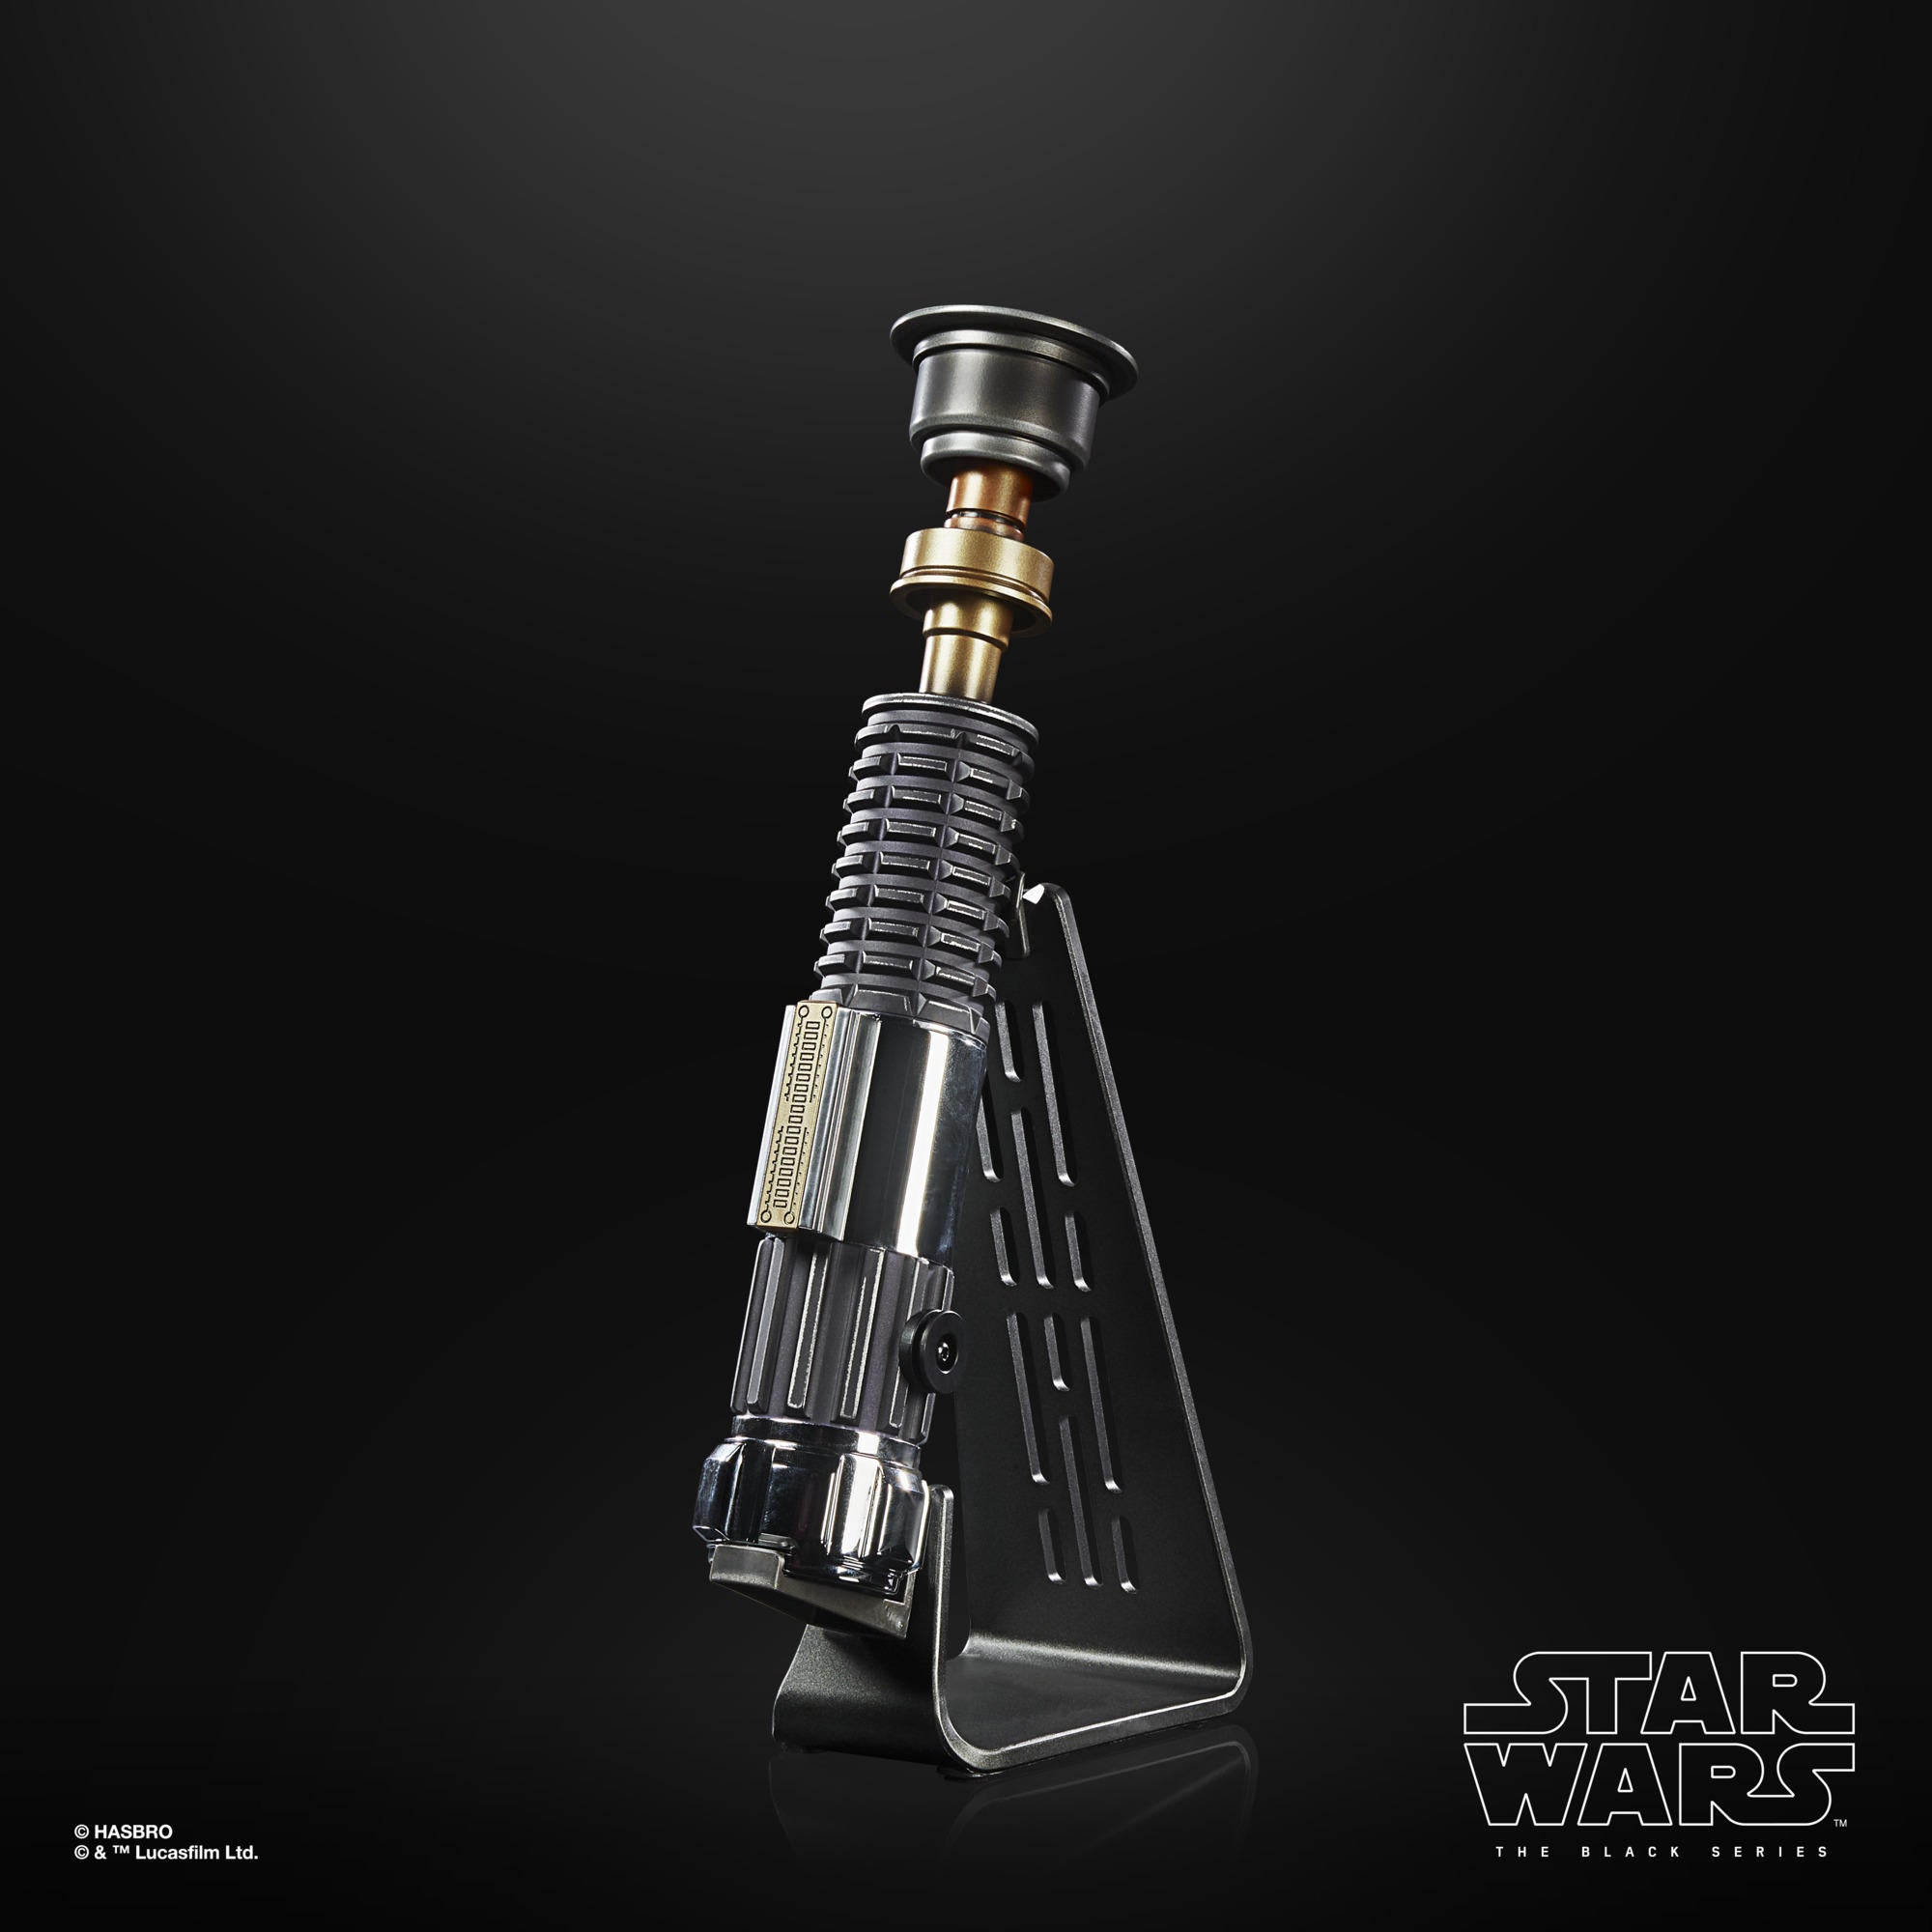 Star Wars Obi-Wan Kenobi Black Series Force FX Lightsaber Is On Sale